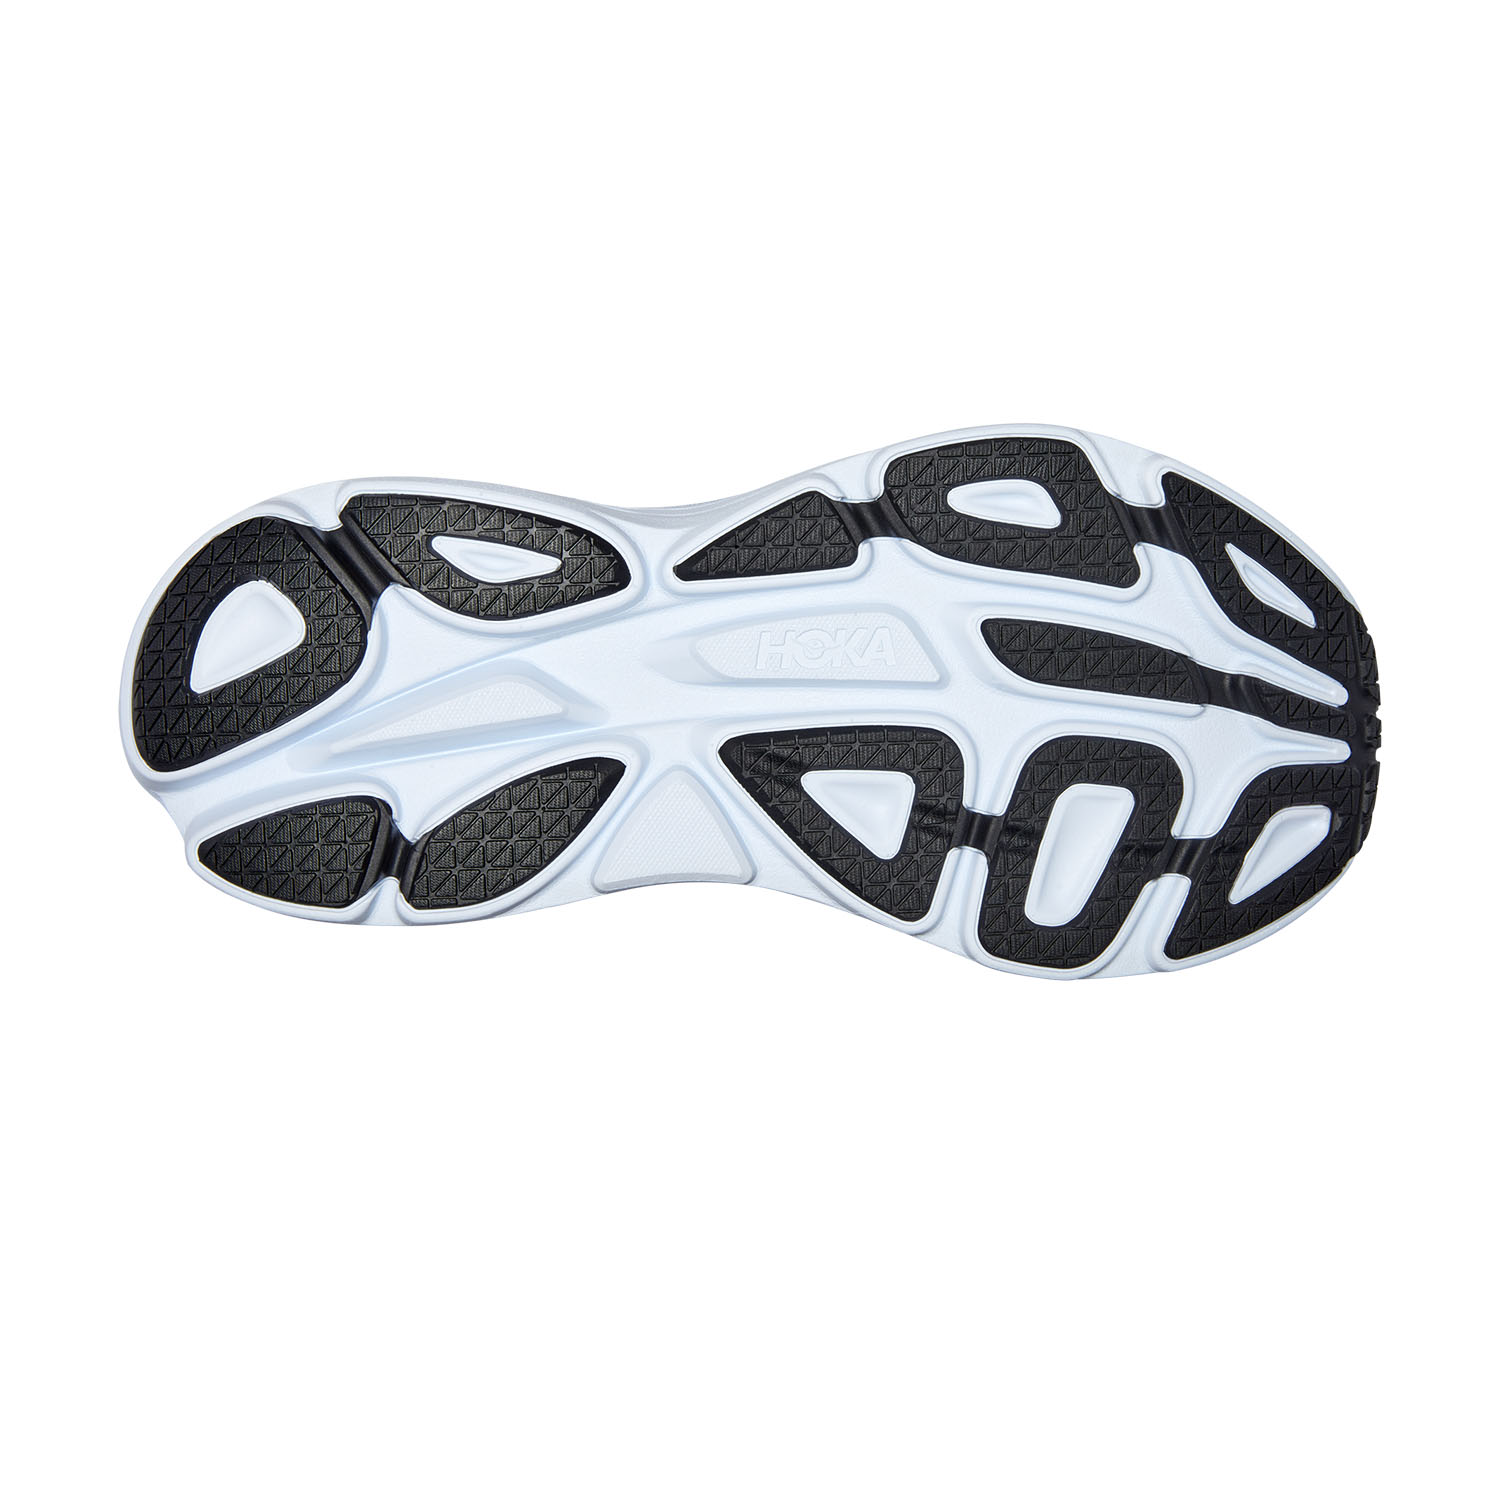 Hoka Bondi 8 Wide Men's Running Shoes - Black/White